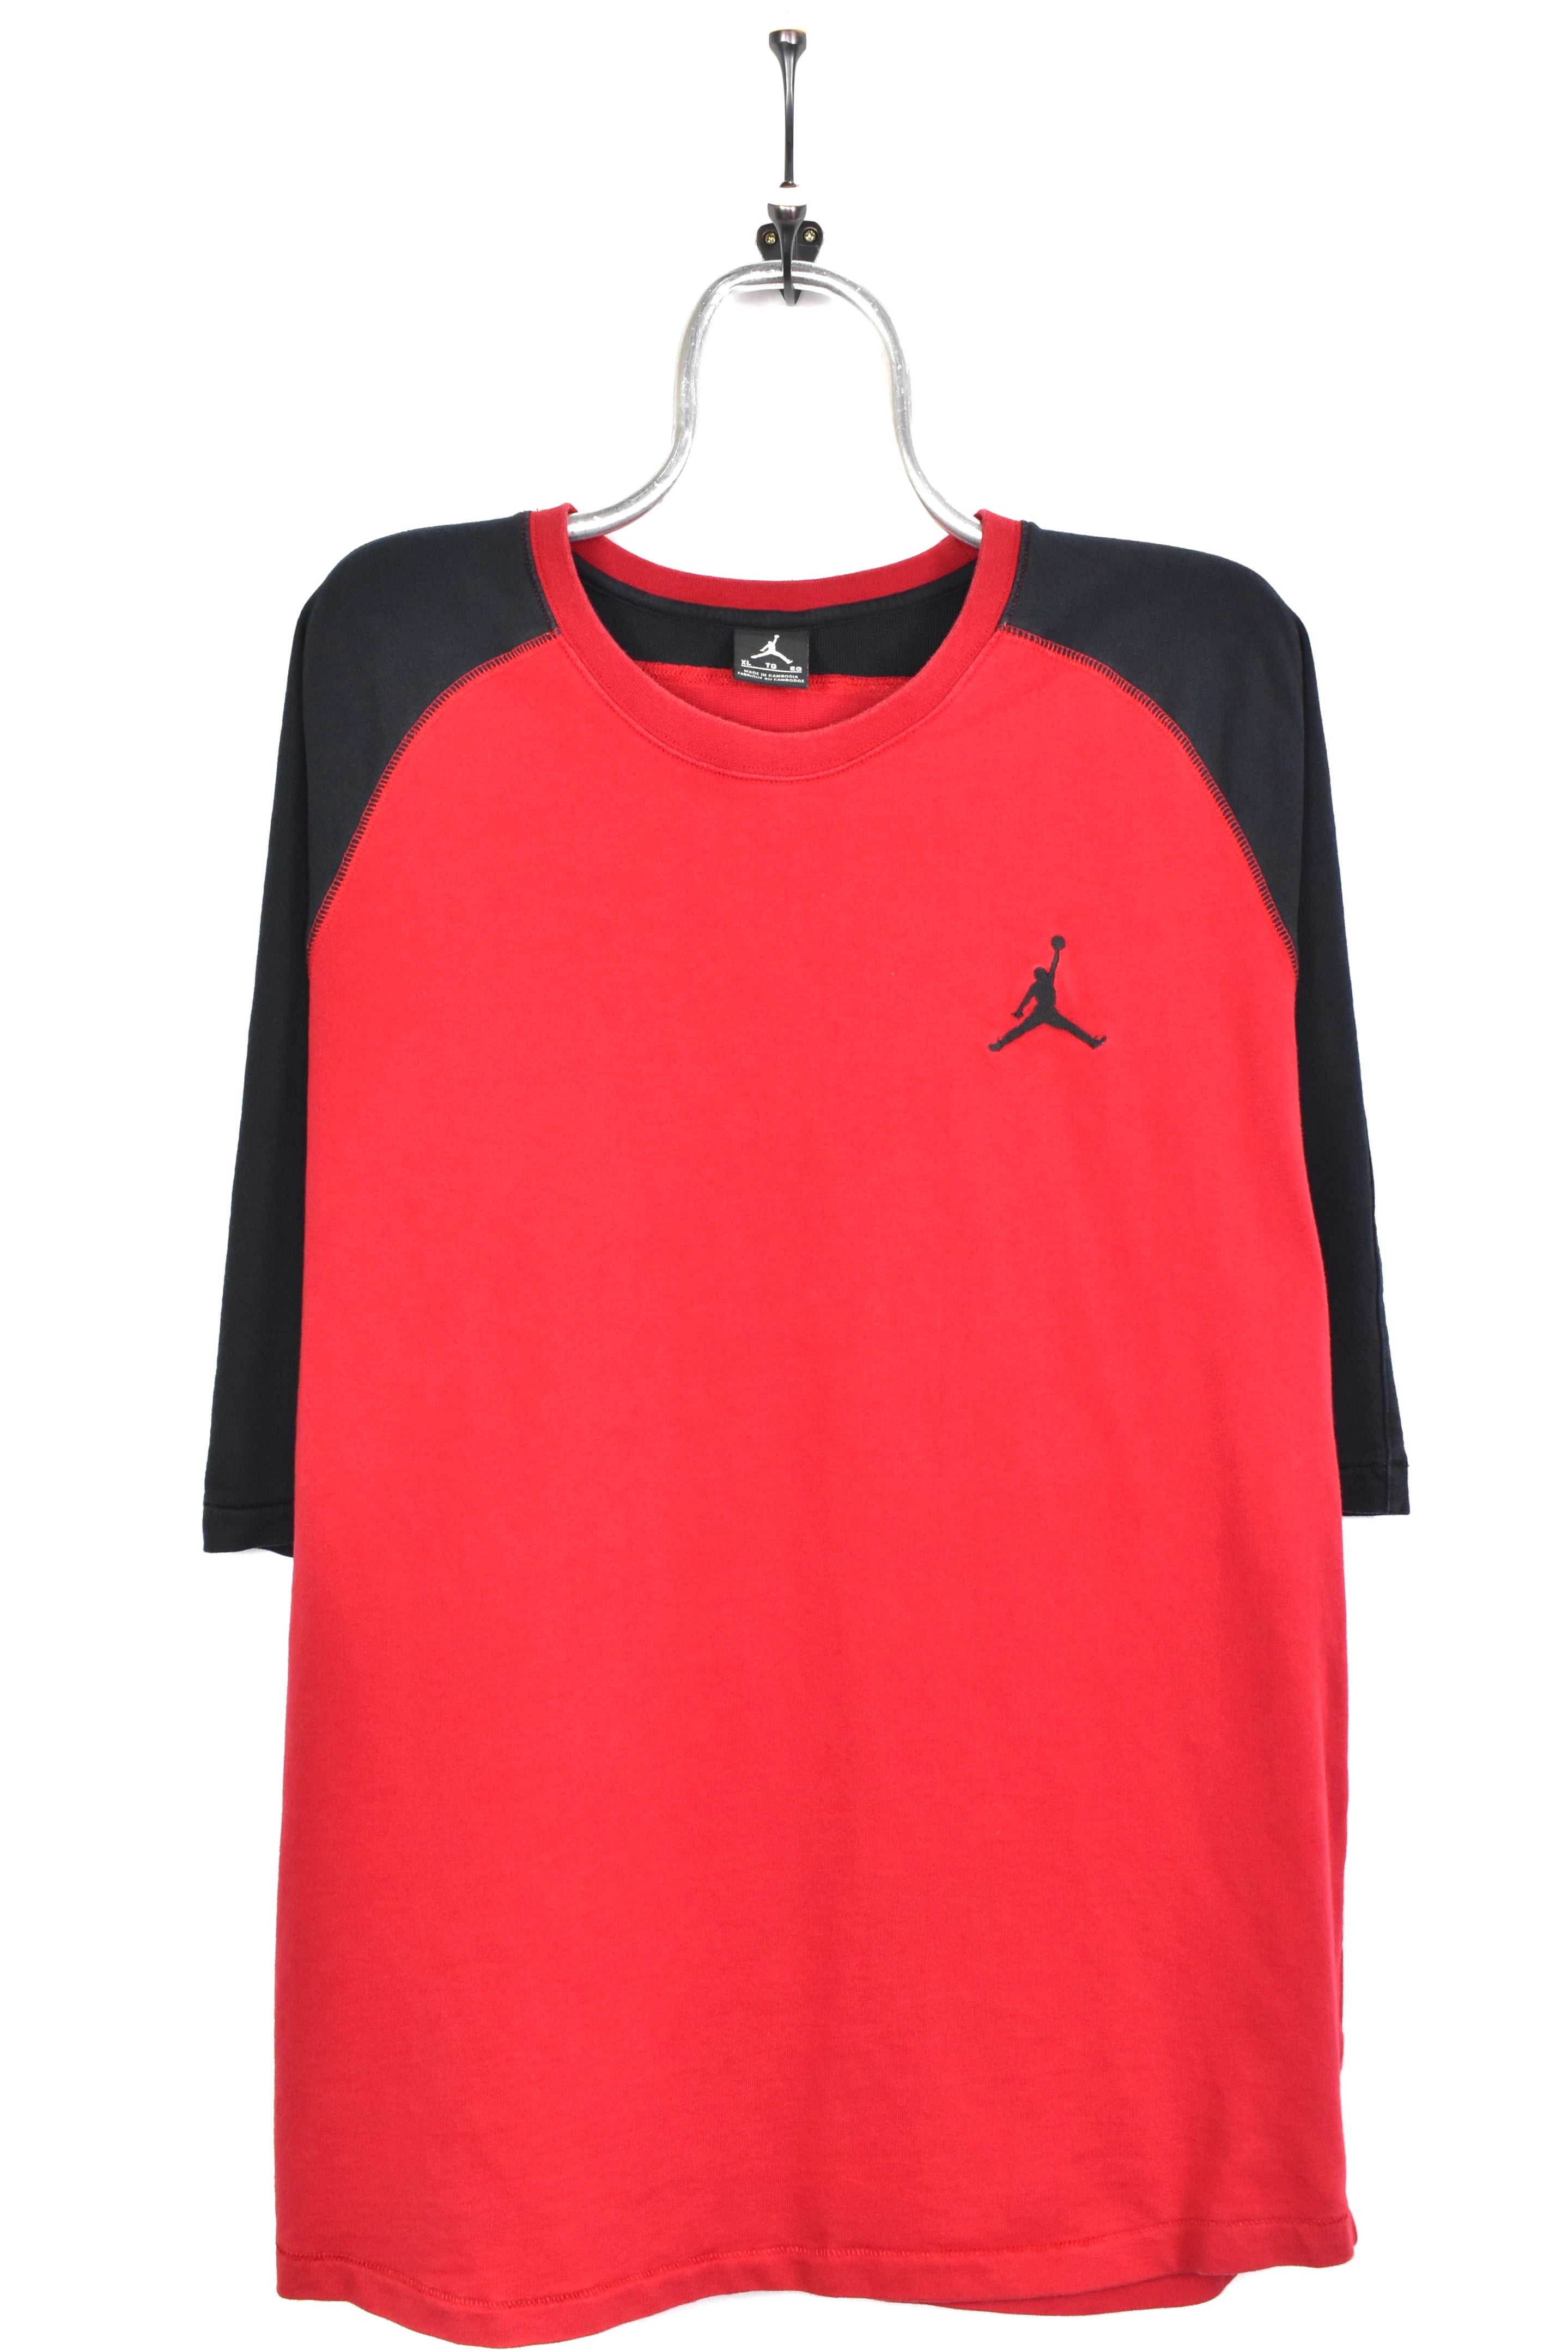 Vintage Nike shirt, Air Jordan embroidered half sleeve tee - XL, red NIKE